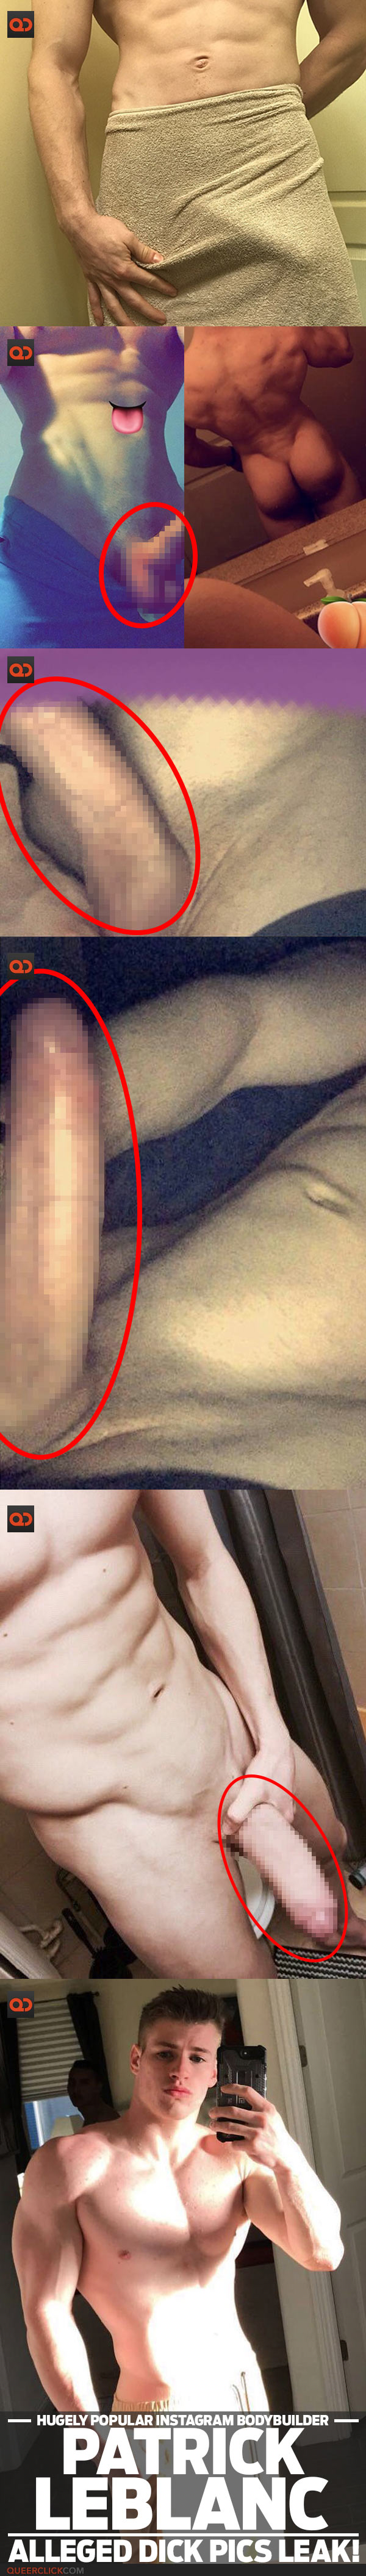 Patrick Leblanc, Hugely Popular Instagram Bodybuilder, Alleged Dick Pics Leak!